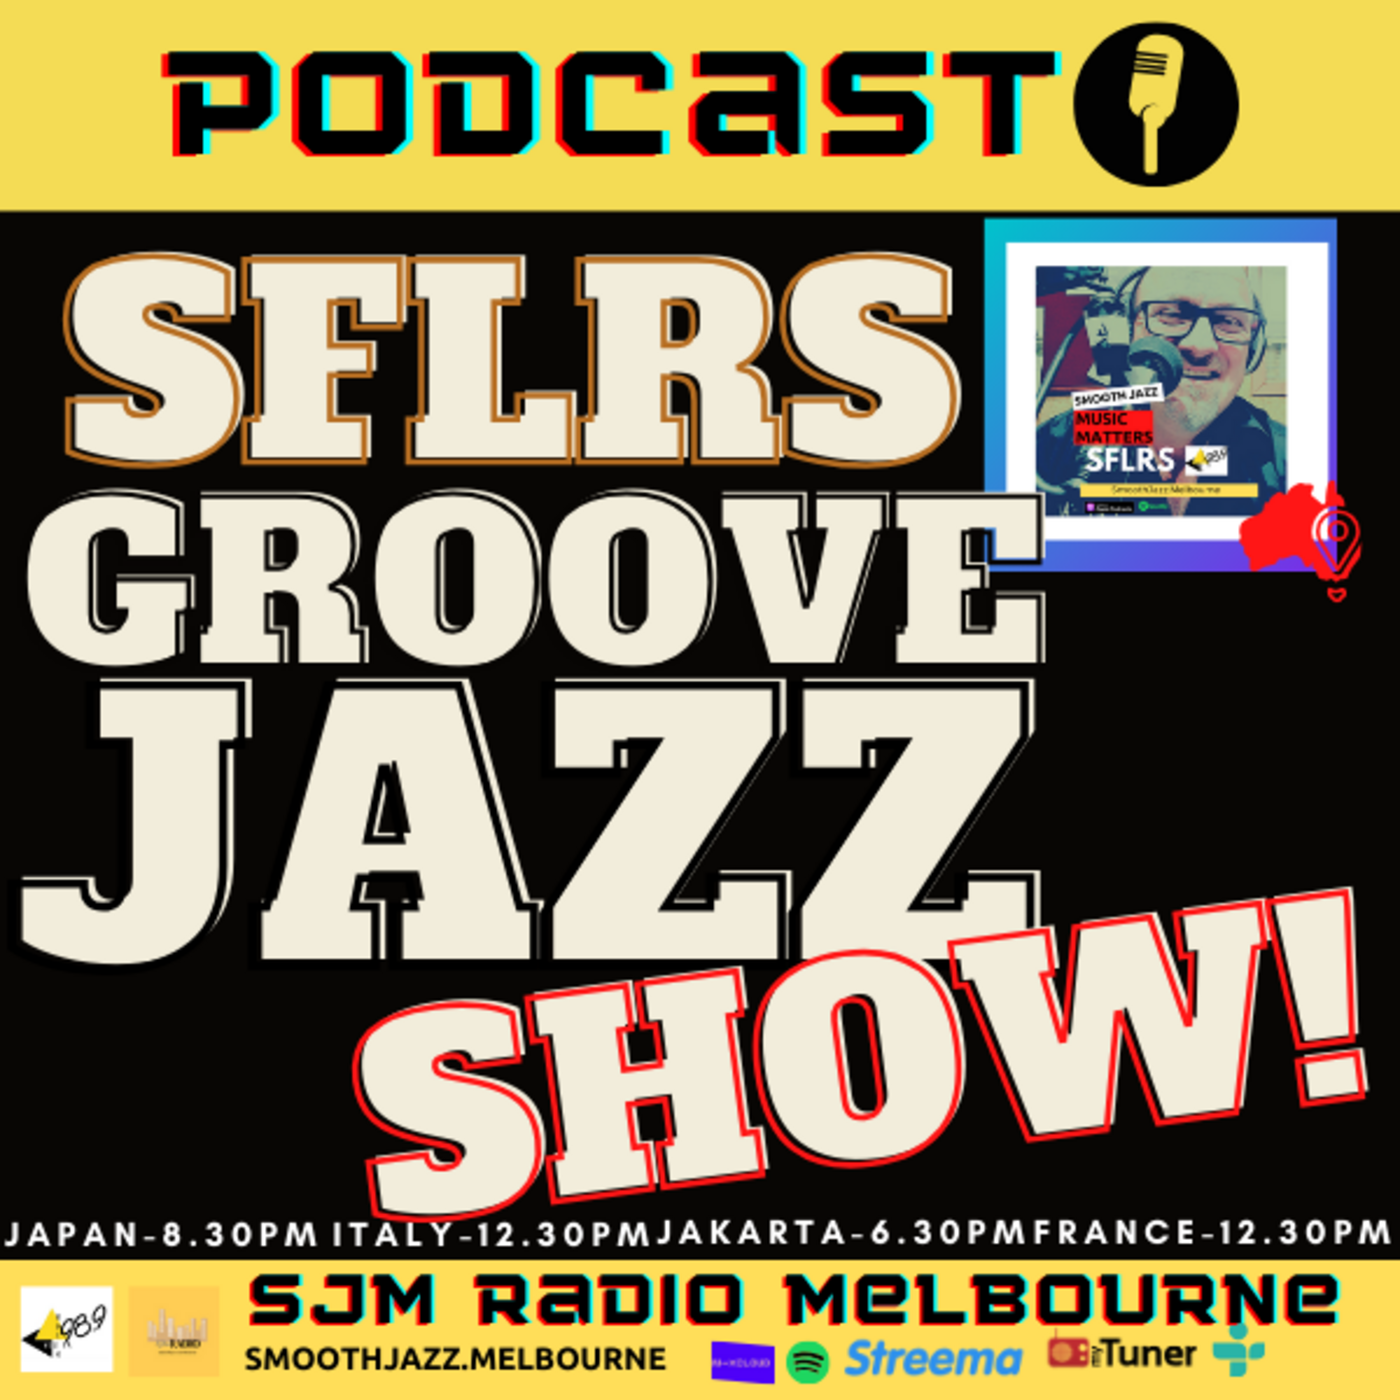 Episode 107: SFLRS_Groove Jazz Show